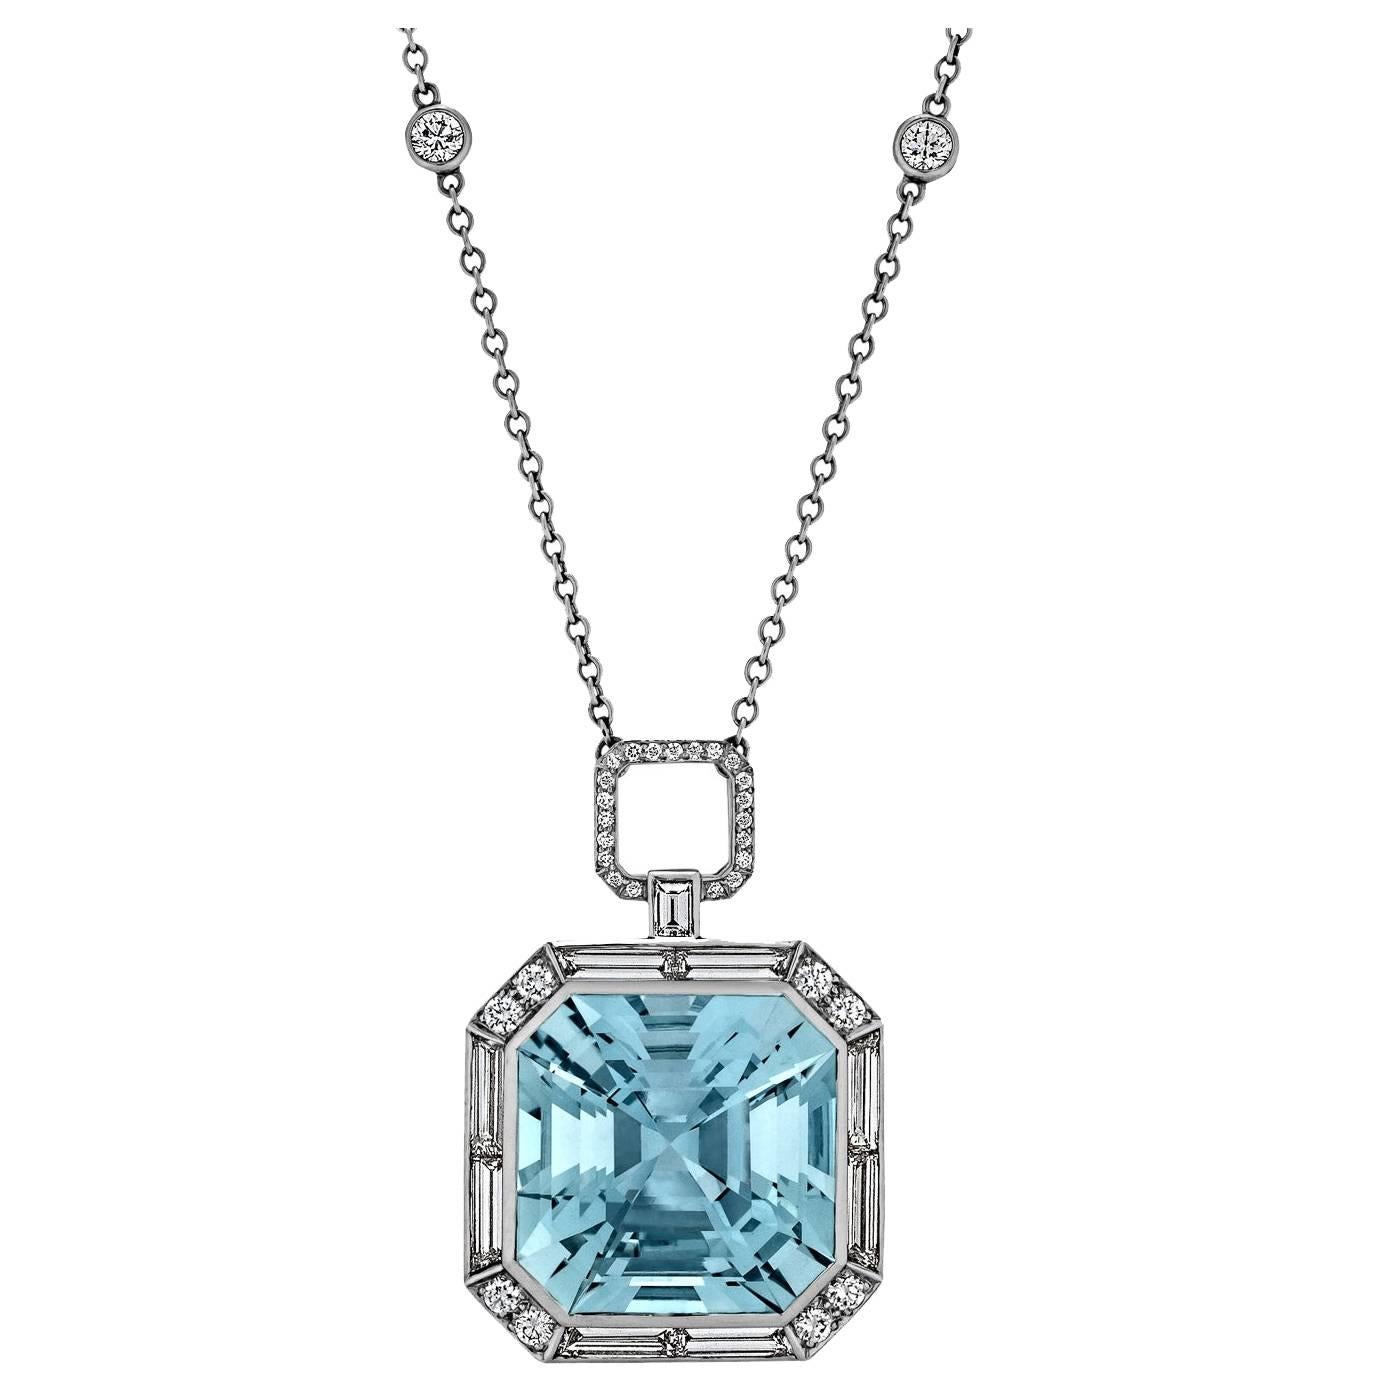 Tiffany & Co. Octagonal Cut Aquamarine Diamond Platinum Pendant with Chain